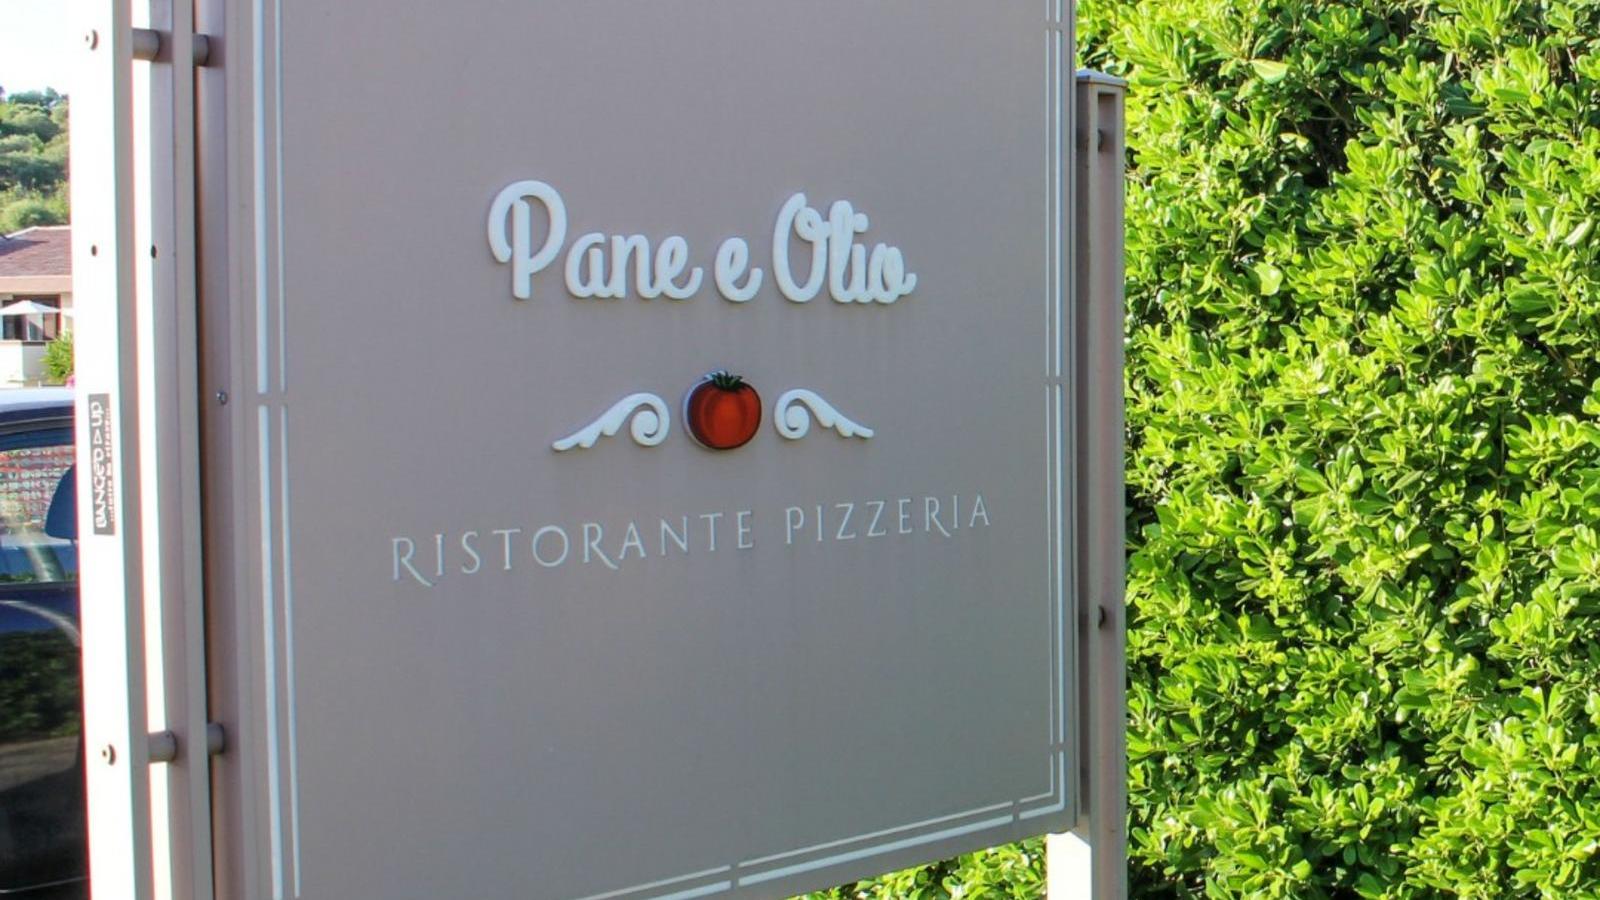 PANE E OLIO - Ristorante Pizzeria